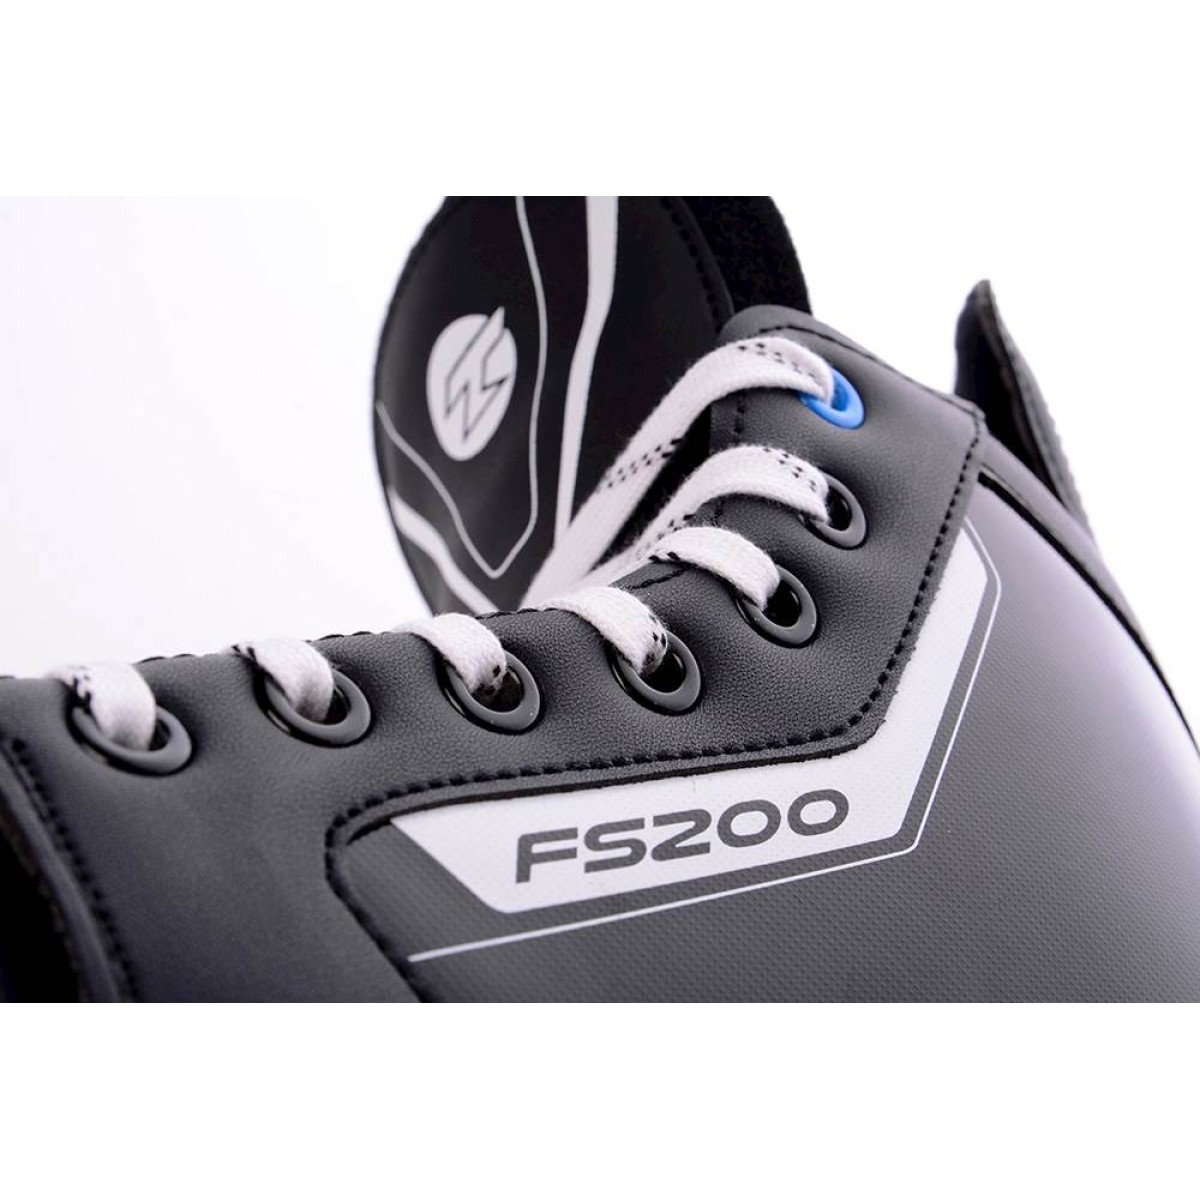 FS 200 adjustable hockey skate TEMPISH - view 5